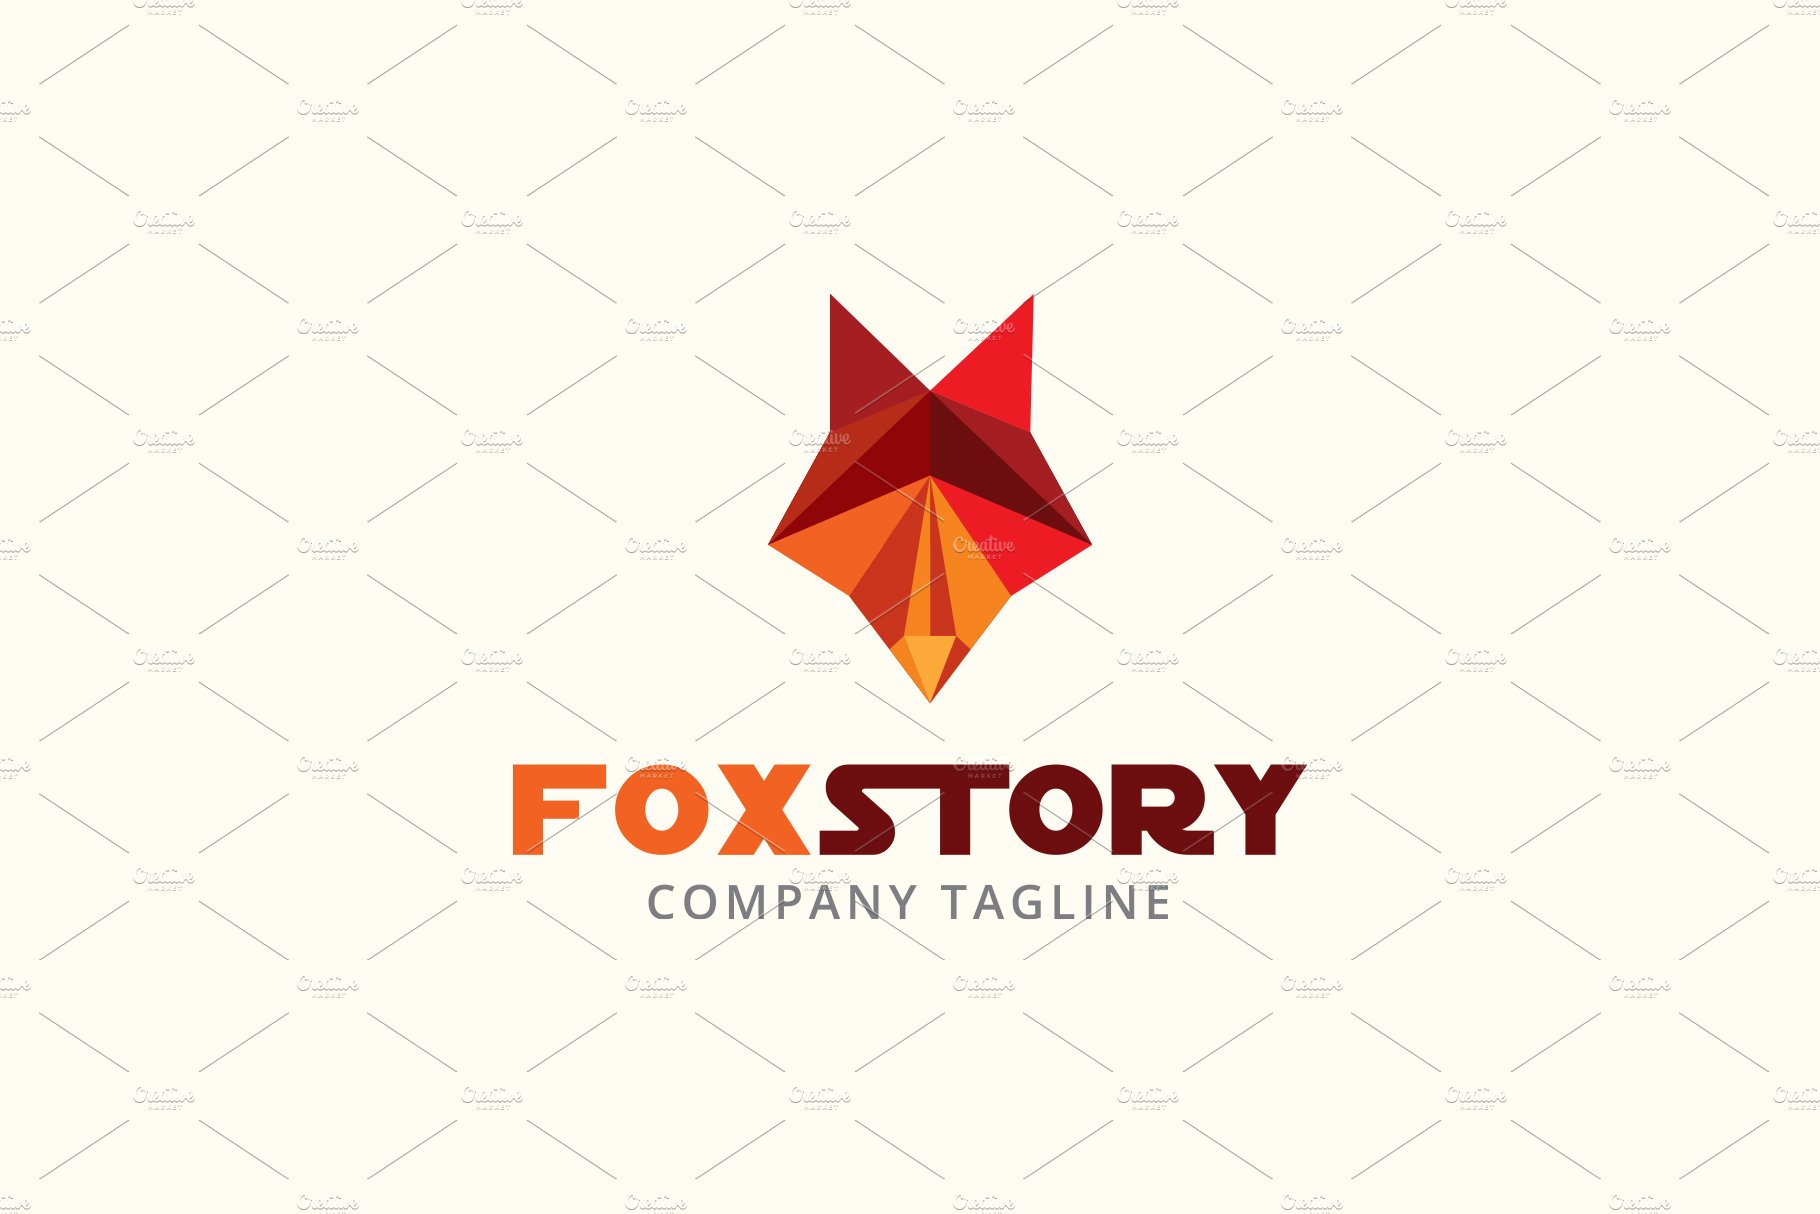 Fox Story Logo cover image.